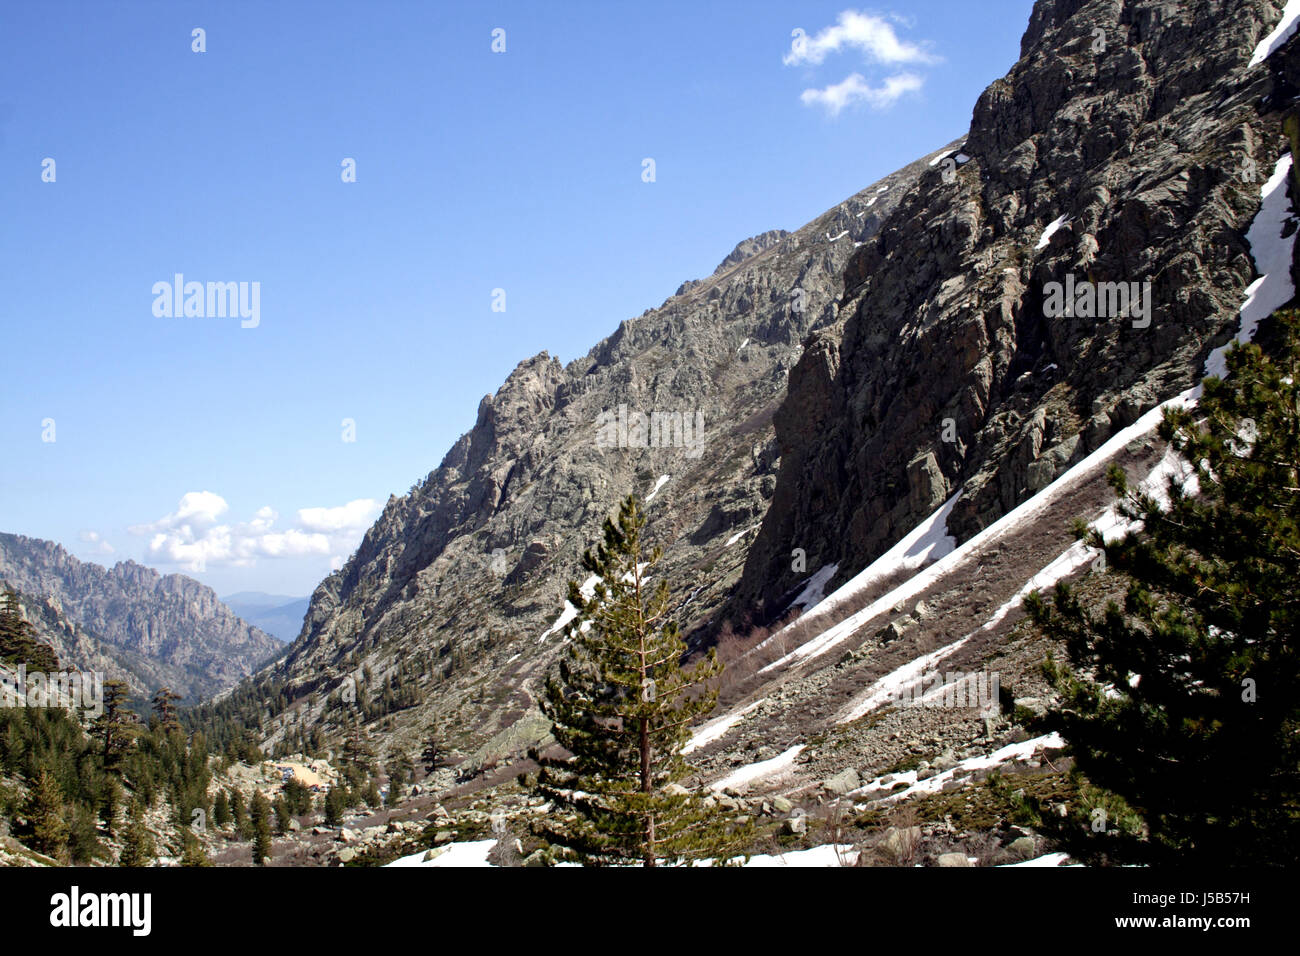 Valle corsica frastagliate gulches boulder mountain restonica schneebedekt Foto Stock